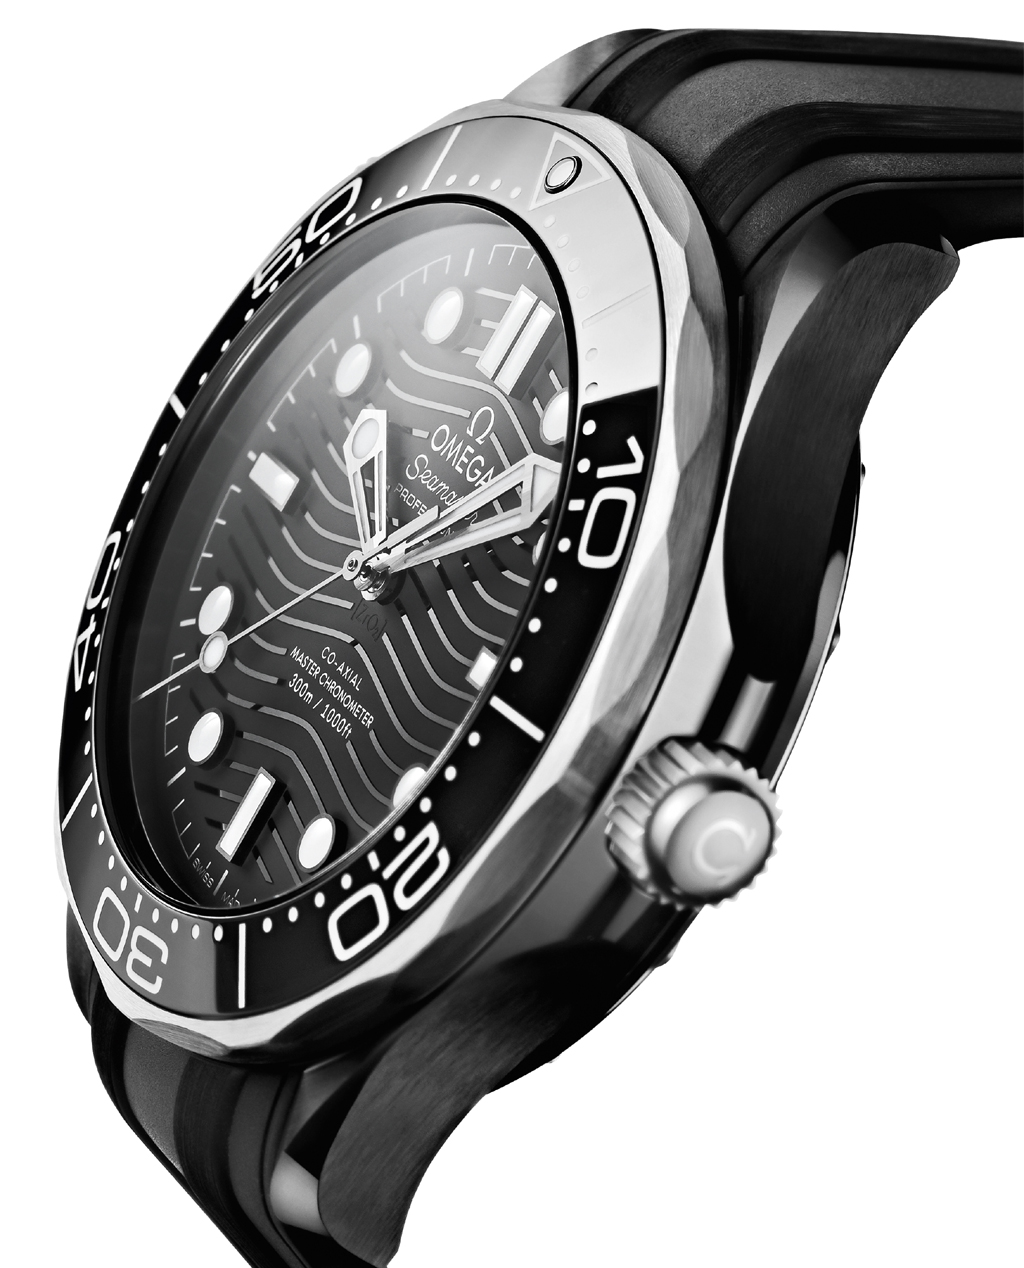 Omega Seamaster Diver 300M 黑色陶瓷款 腕表發佈 